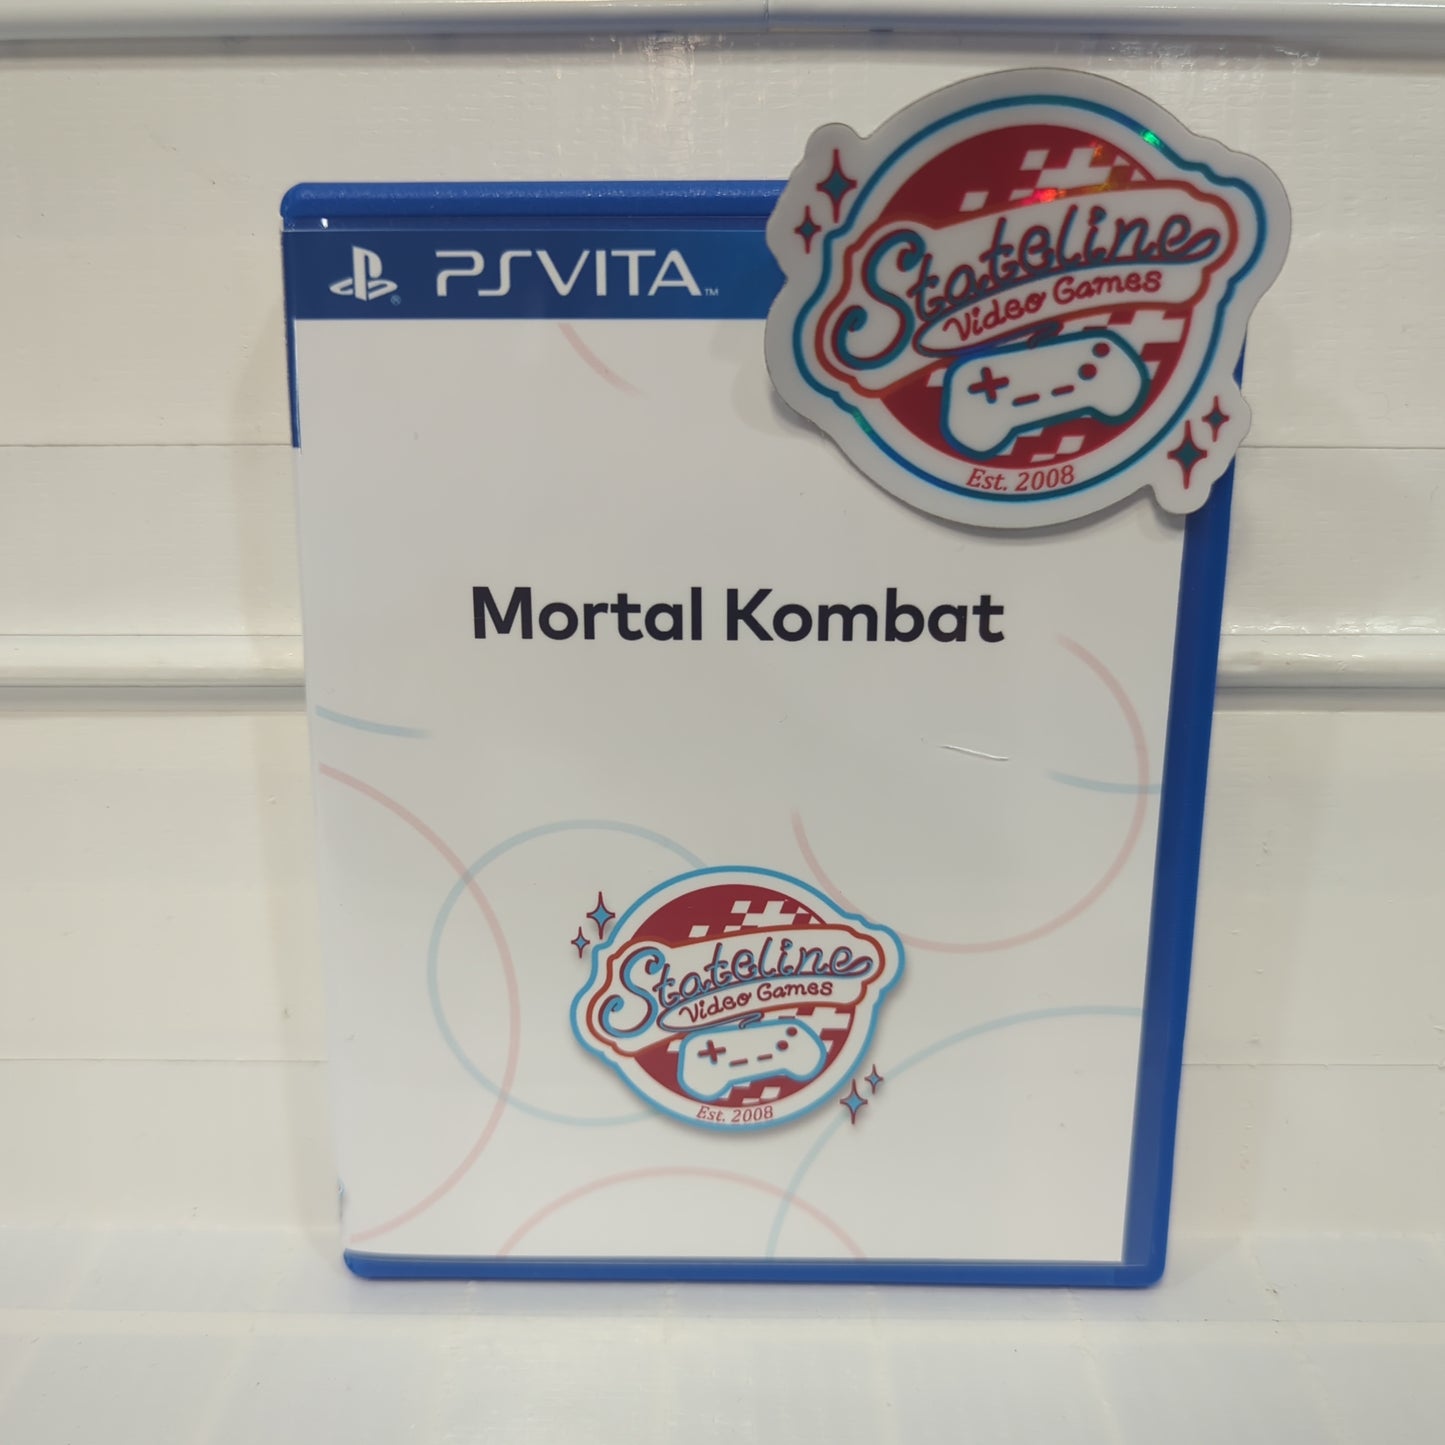 Mortal Kombat - Playstation Vita